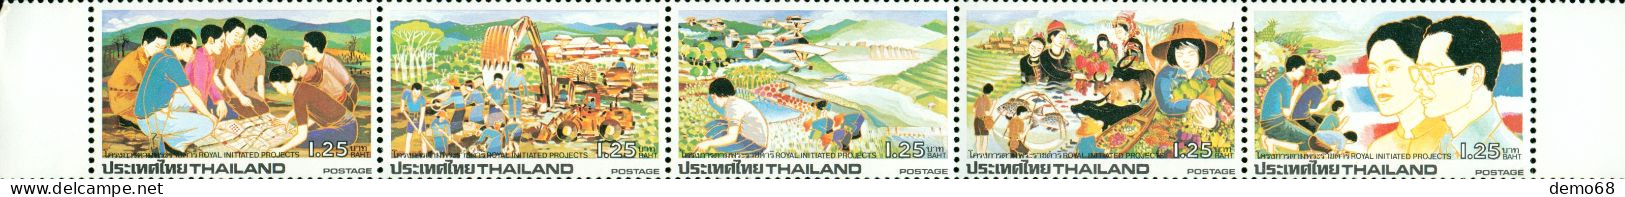 Thaïlande Thailand Bandeau De 5 Fives Stamp 1.25 Baht Timbres Neuf New - Thailand